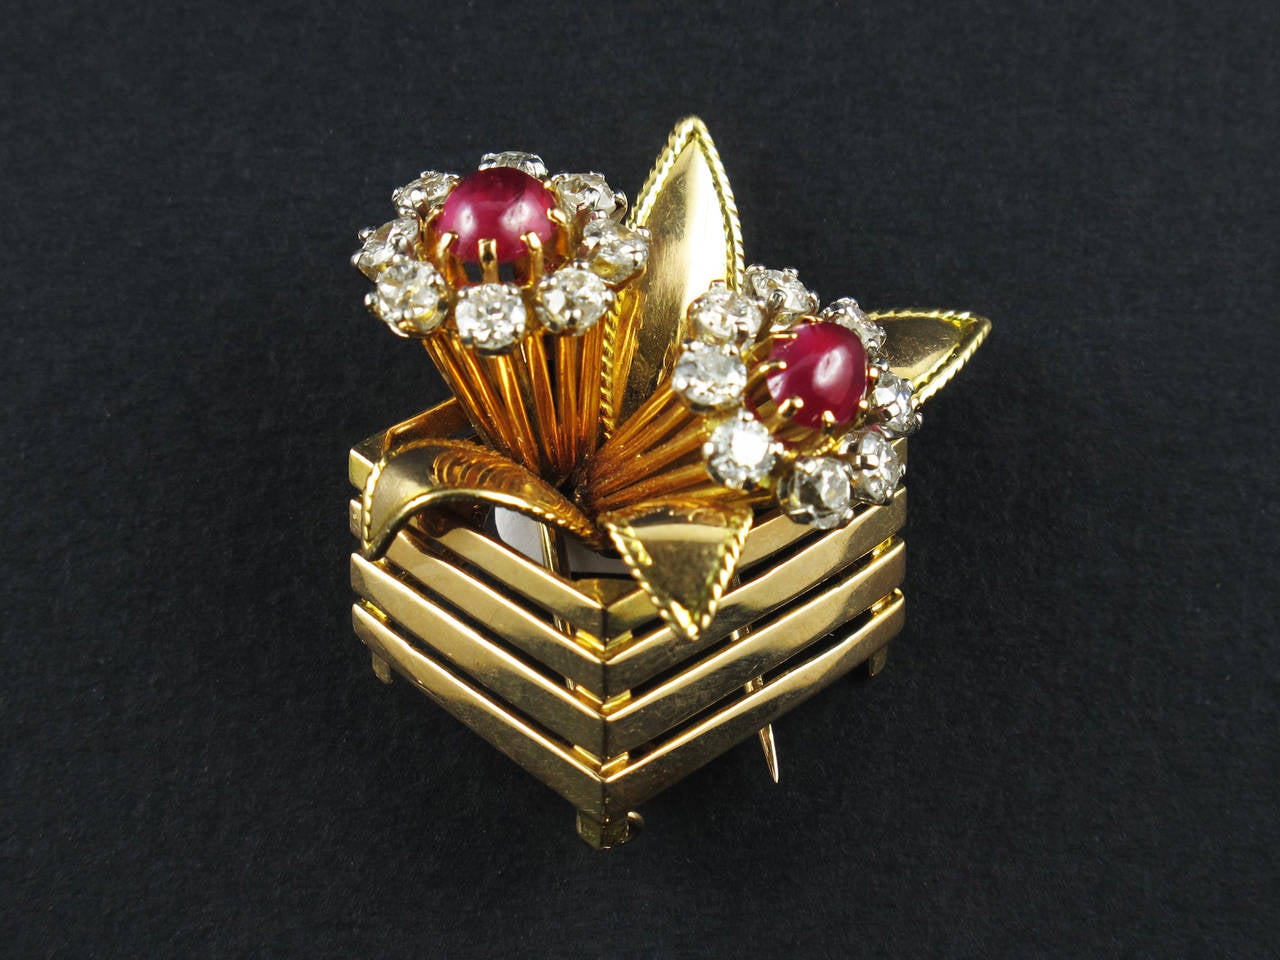 An 18 kt gold diamond and ruby basket brooch. Mauboussin, Paris, 1940 c.a.